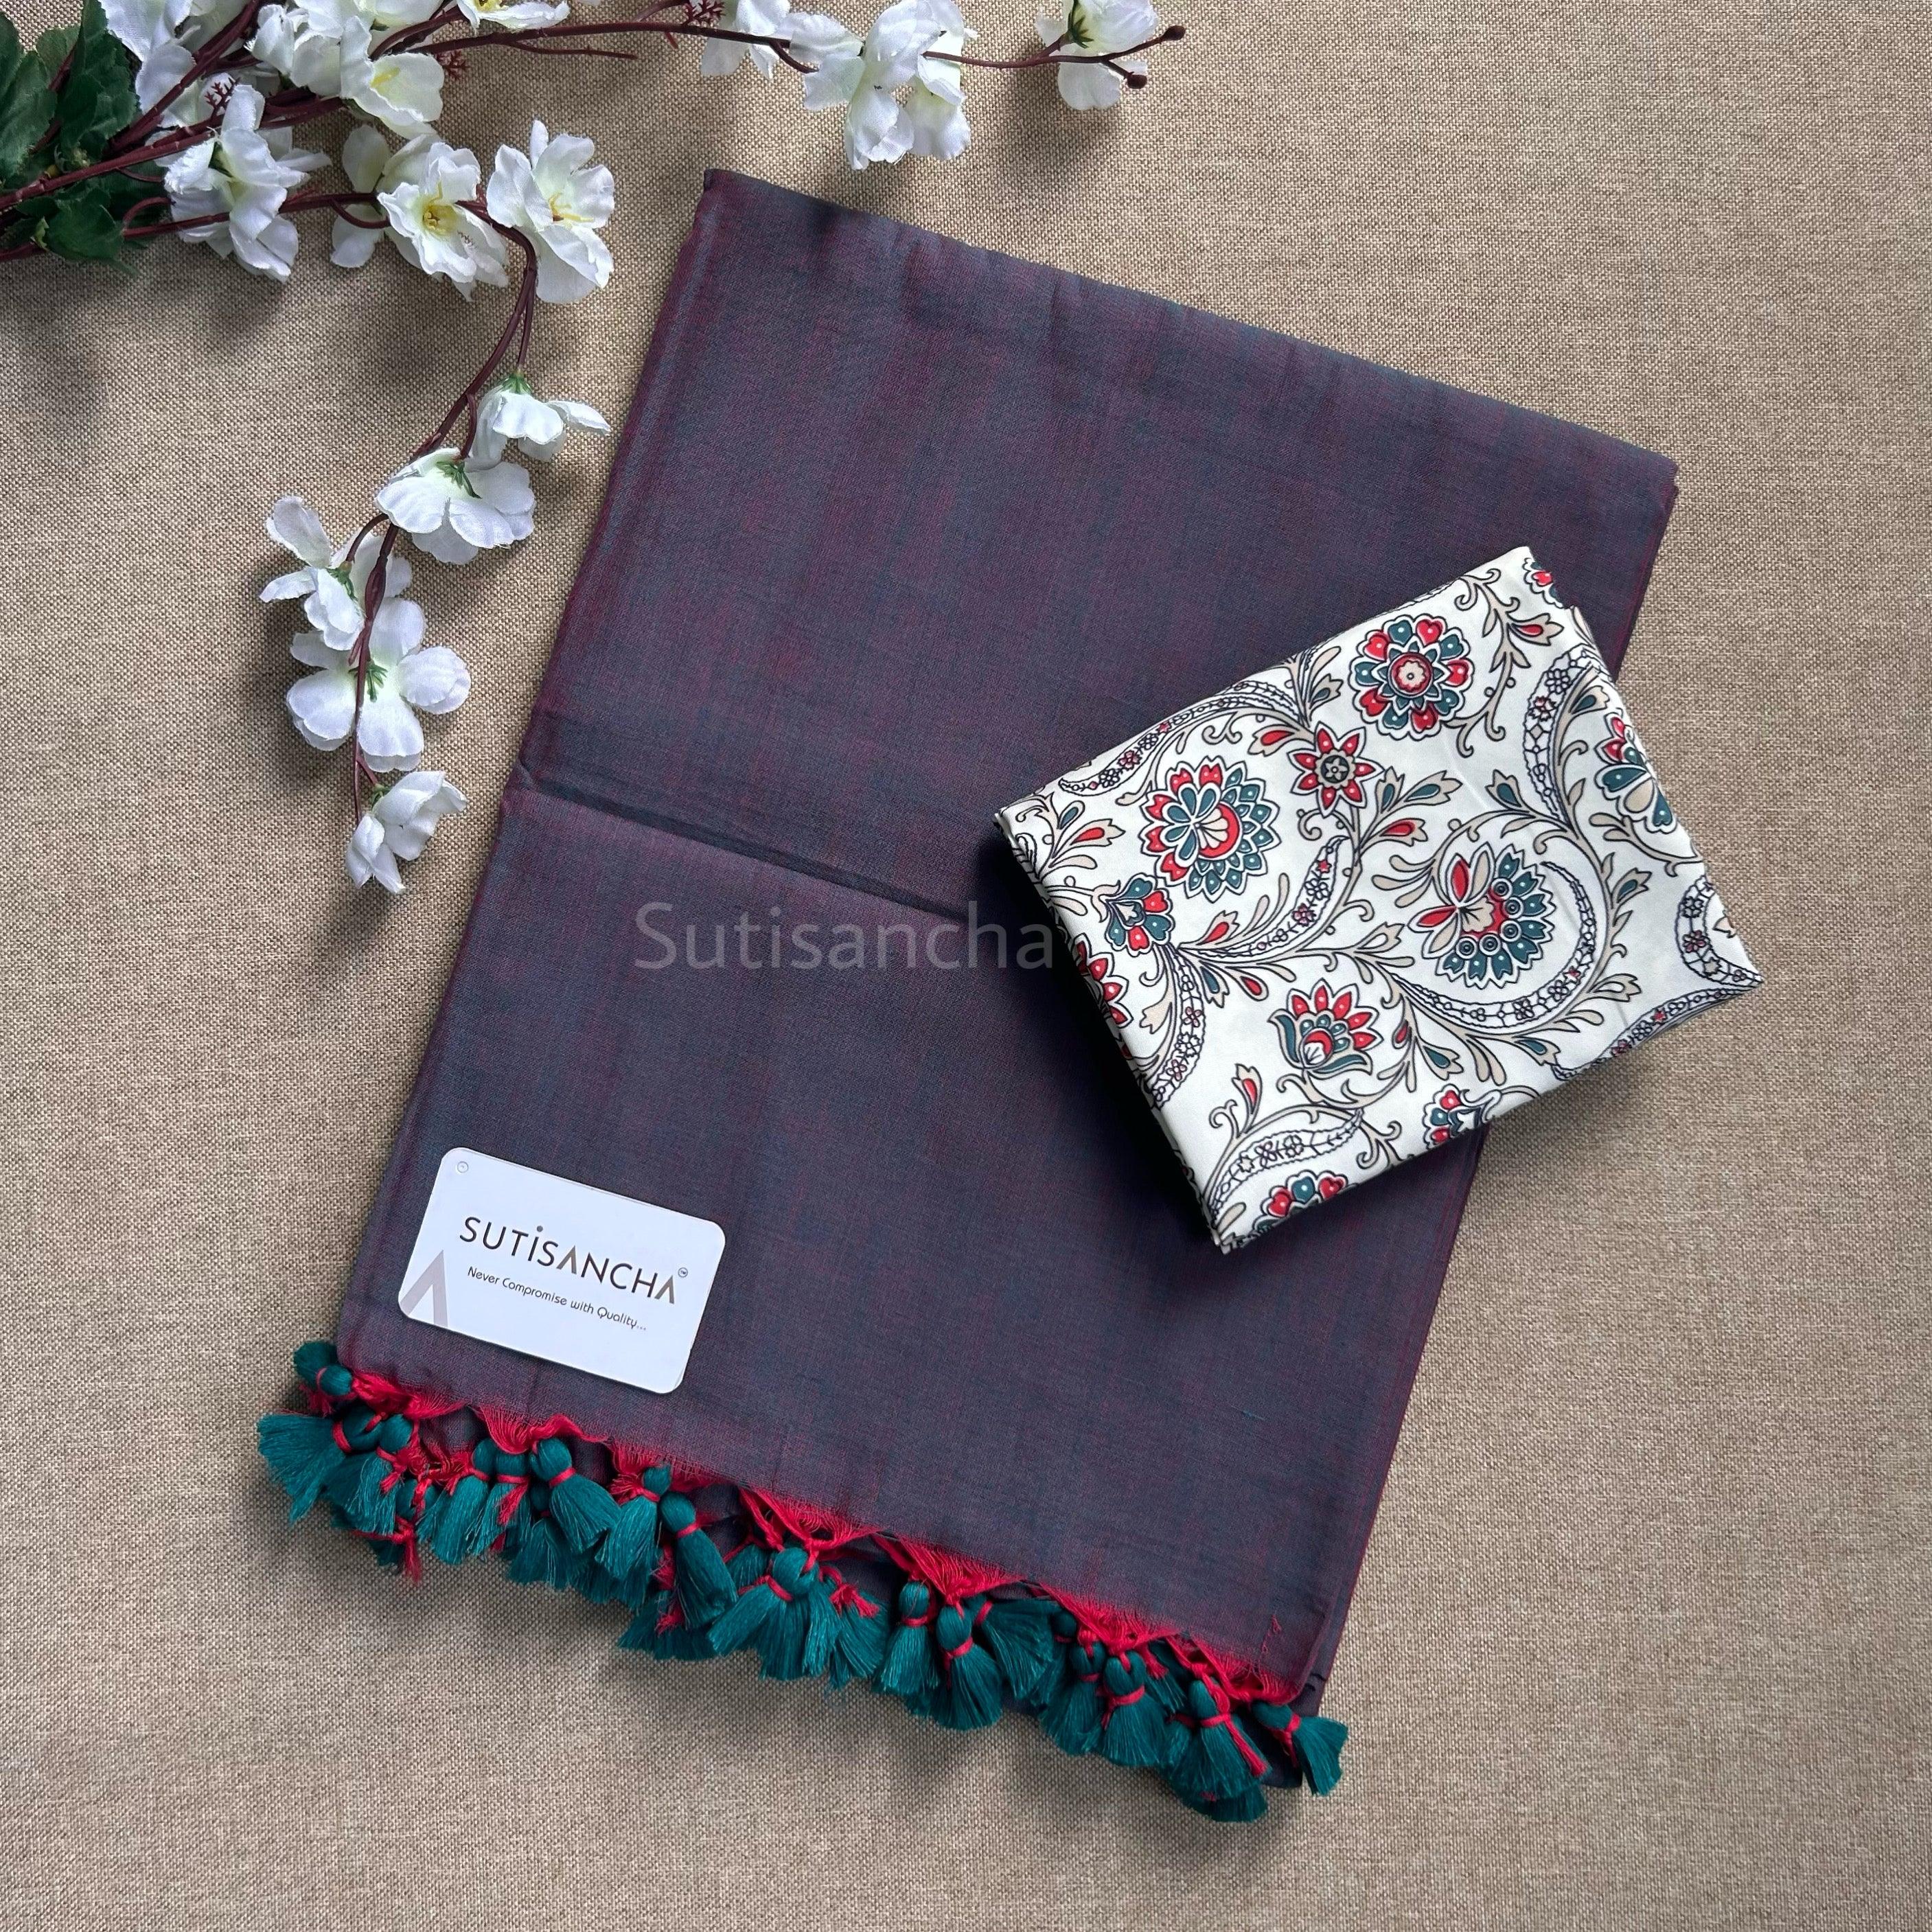 Sutisancha Dual Tone Rama with Cotton Blouse - Suti Sancha